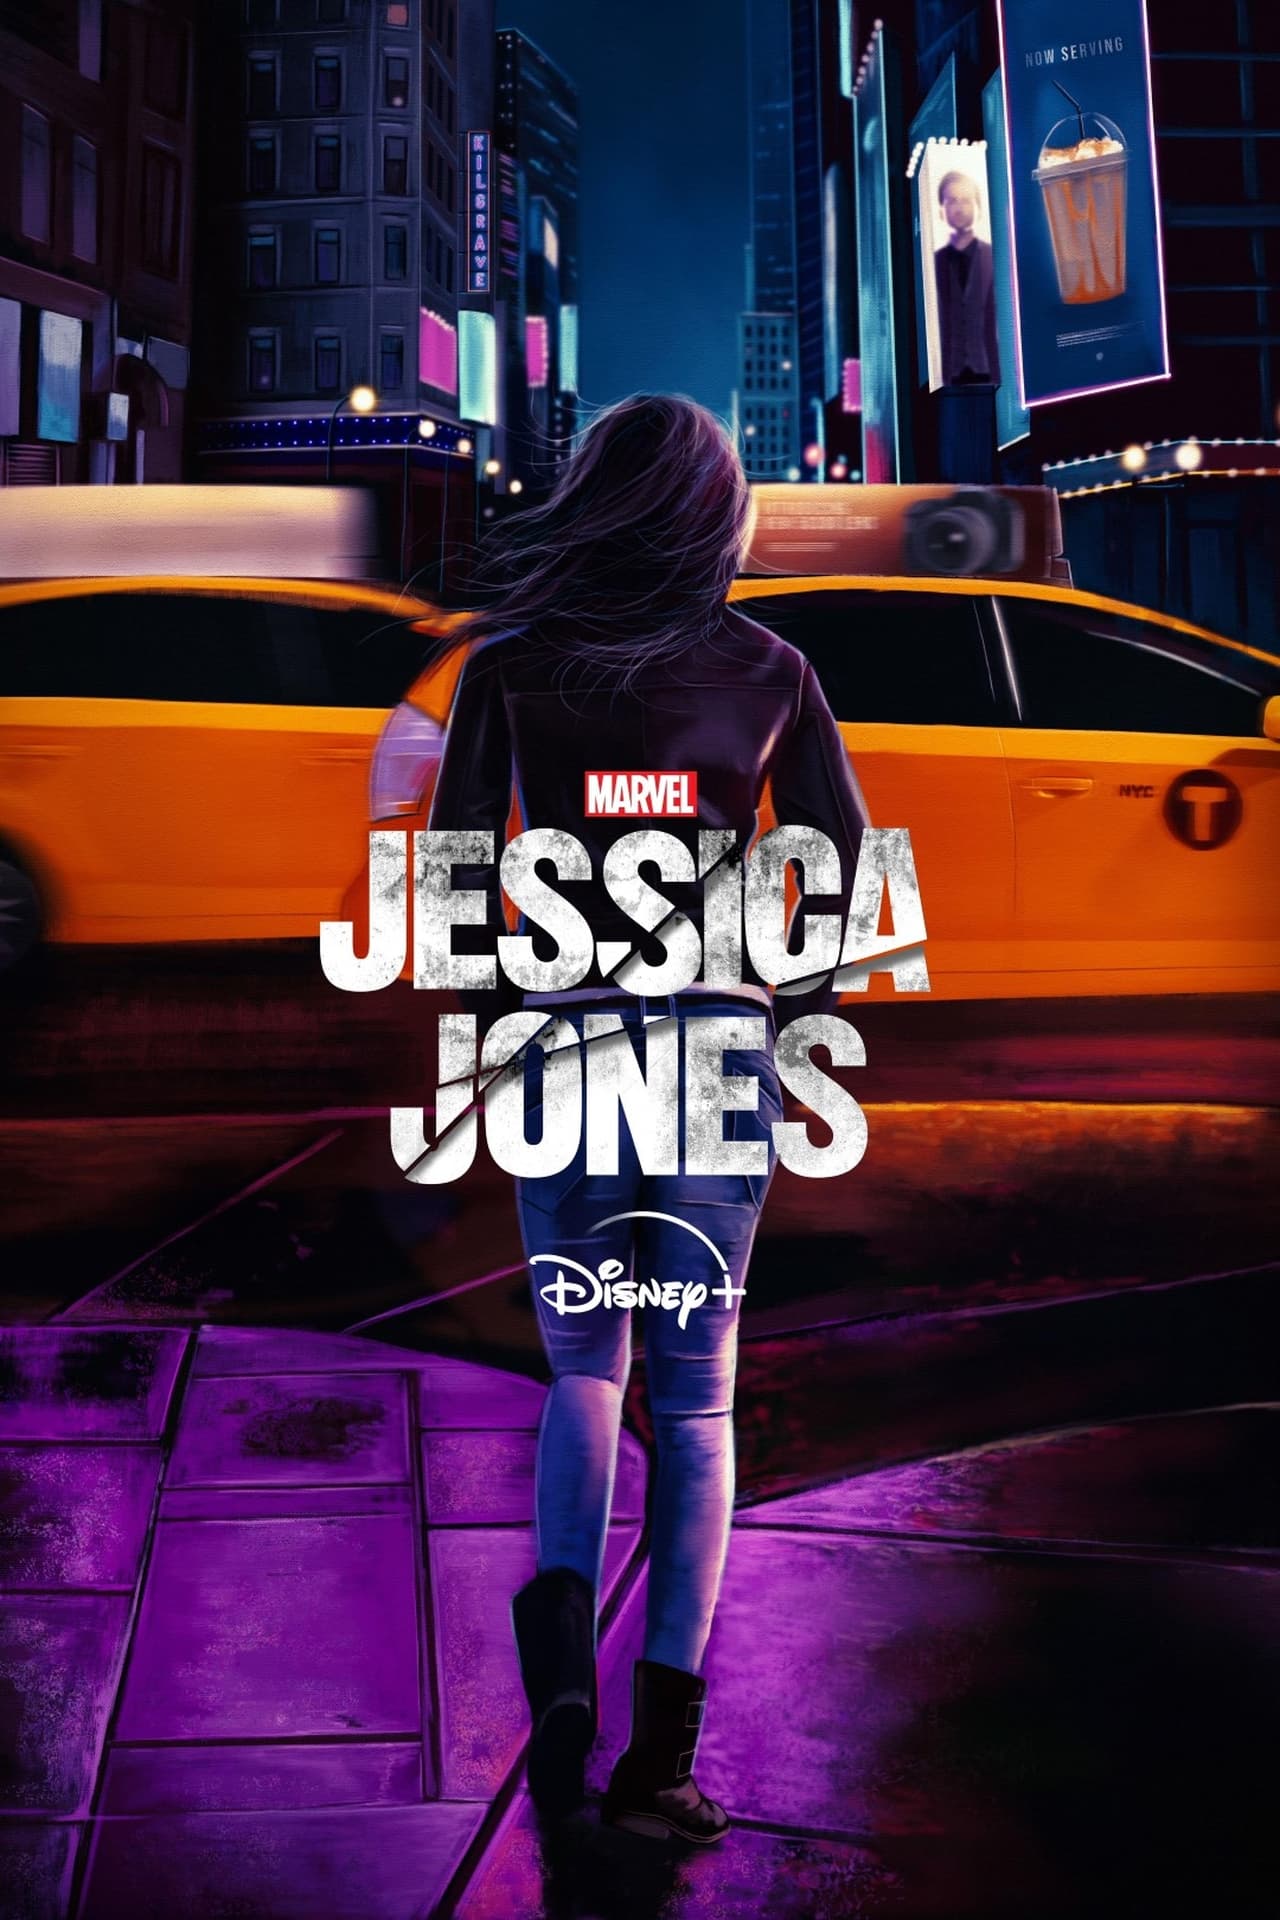 Jessica Jones (2015) S1 EP01&EP13 256Kbps 23.976Fps 48Khz 5.1Ch Disney+ DD+ E-AC3 Turkish Audio TAC